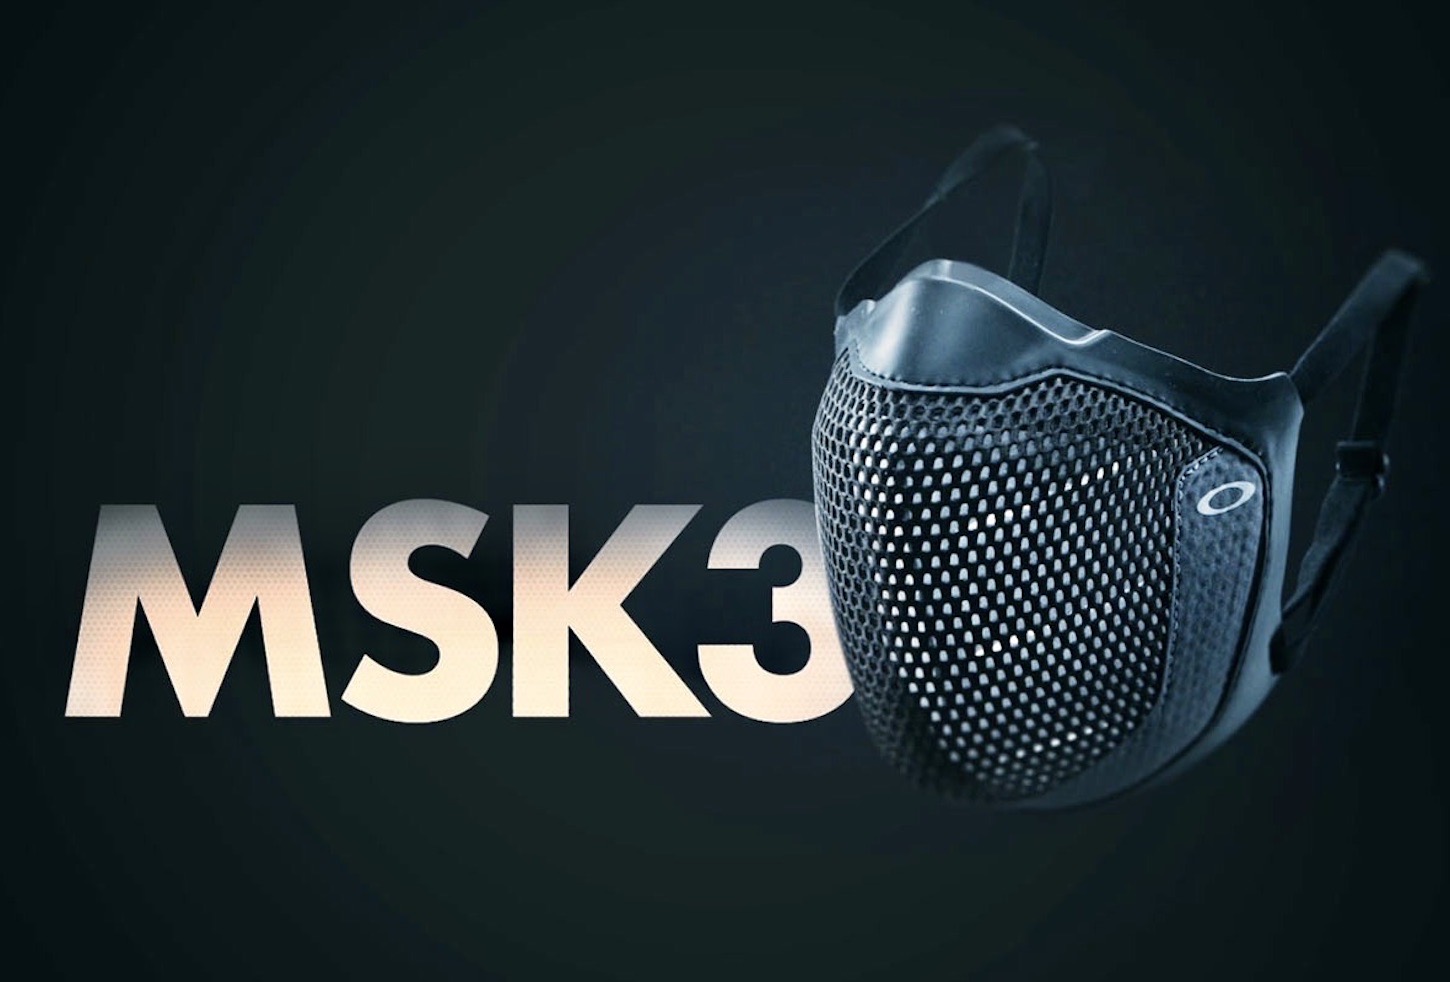 CapoVelo.com - Oakley Offers New MSK3 Face Mask